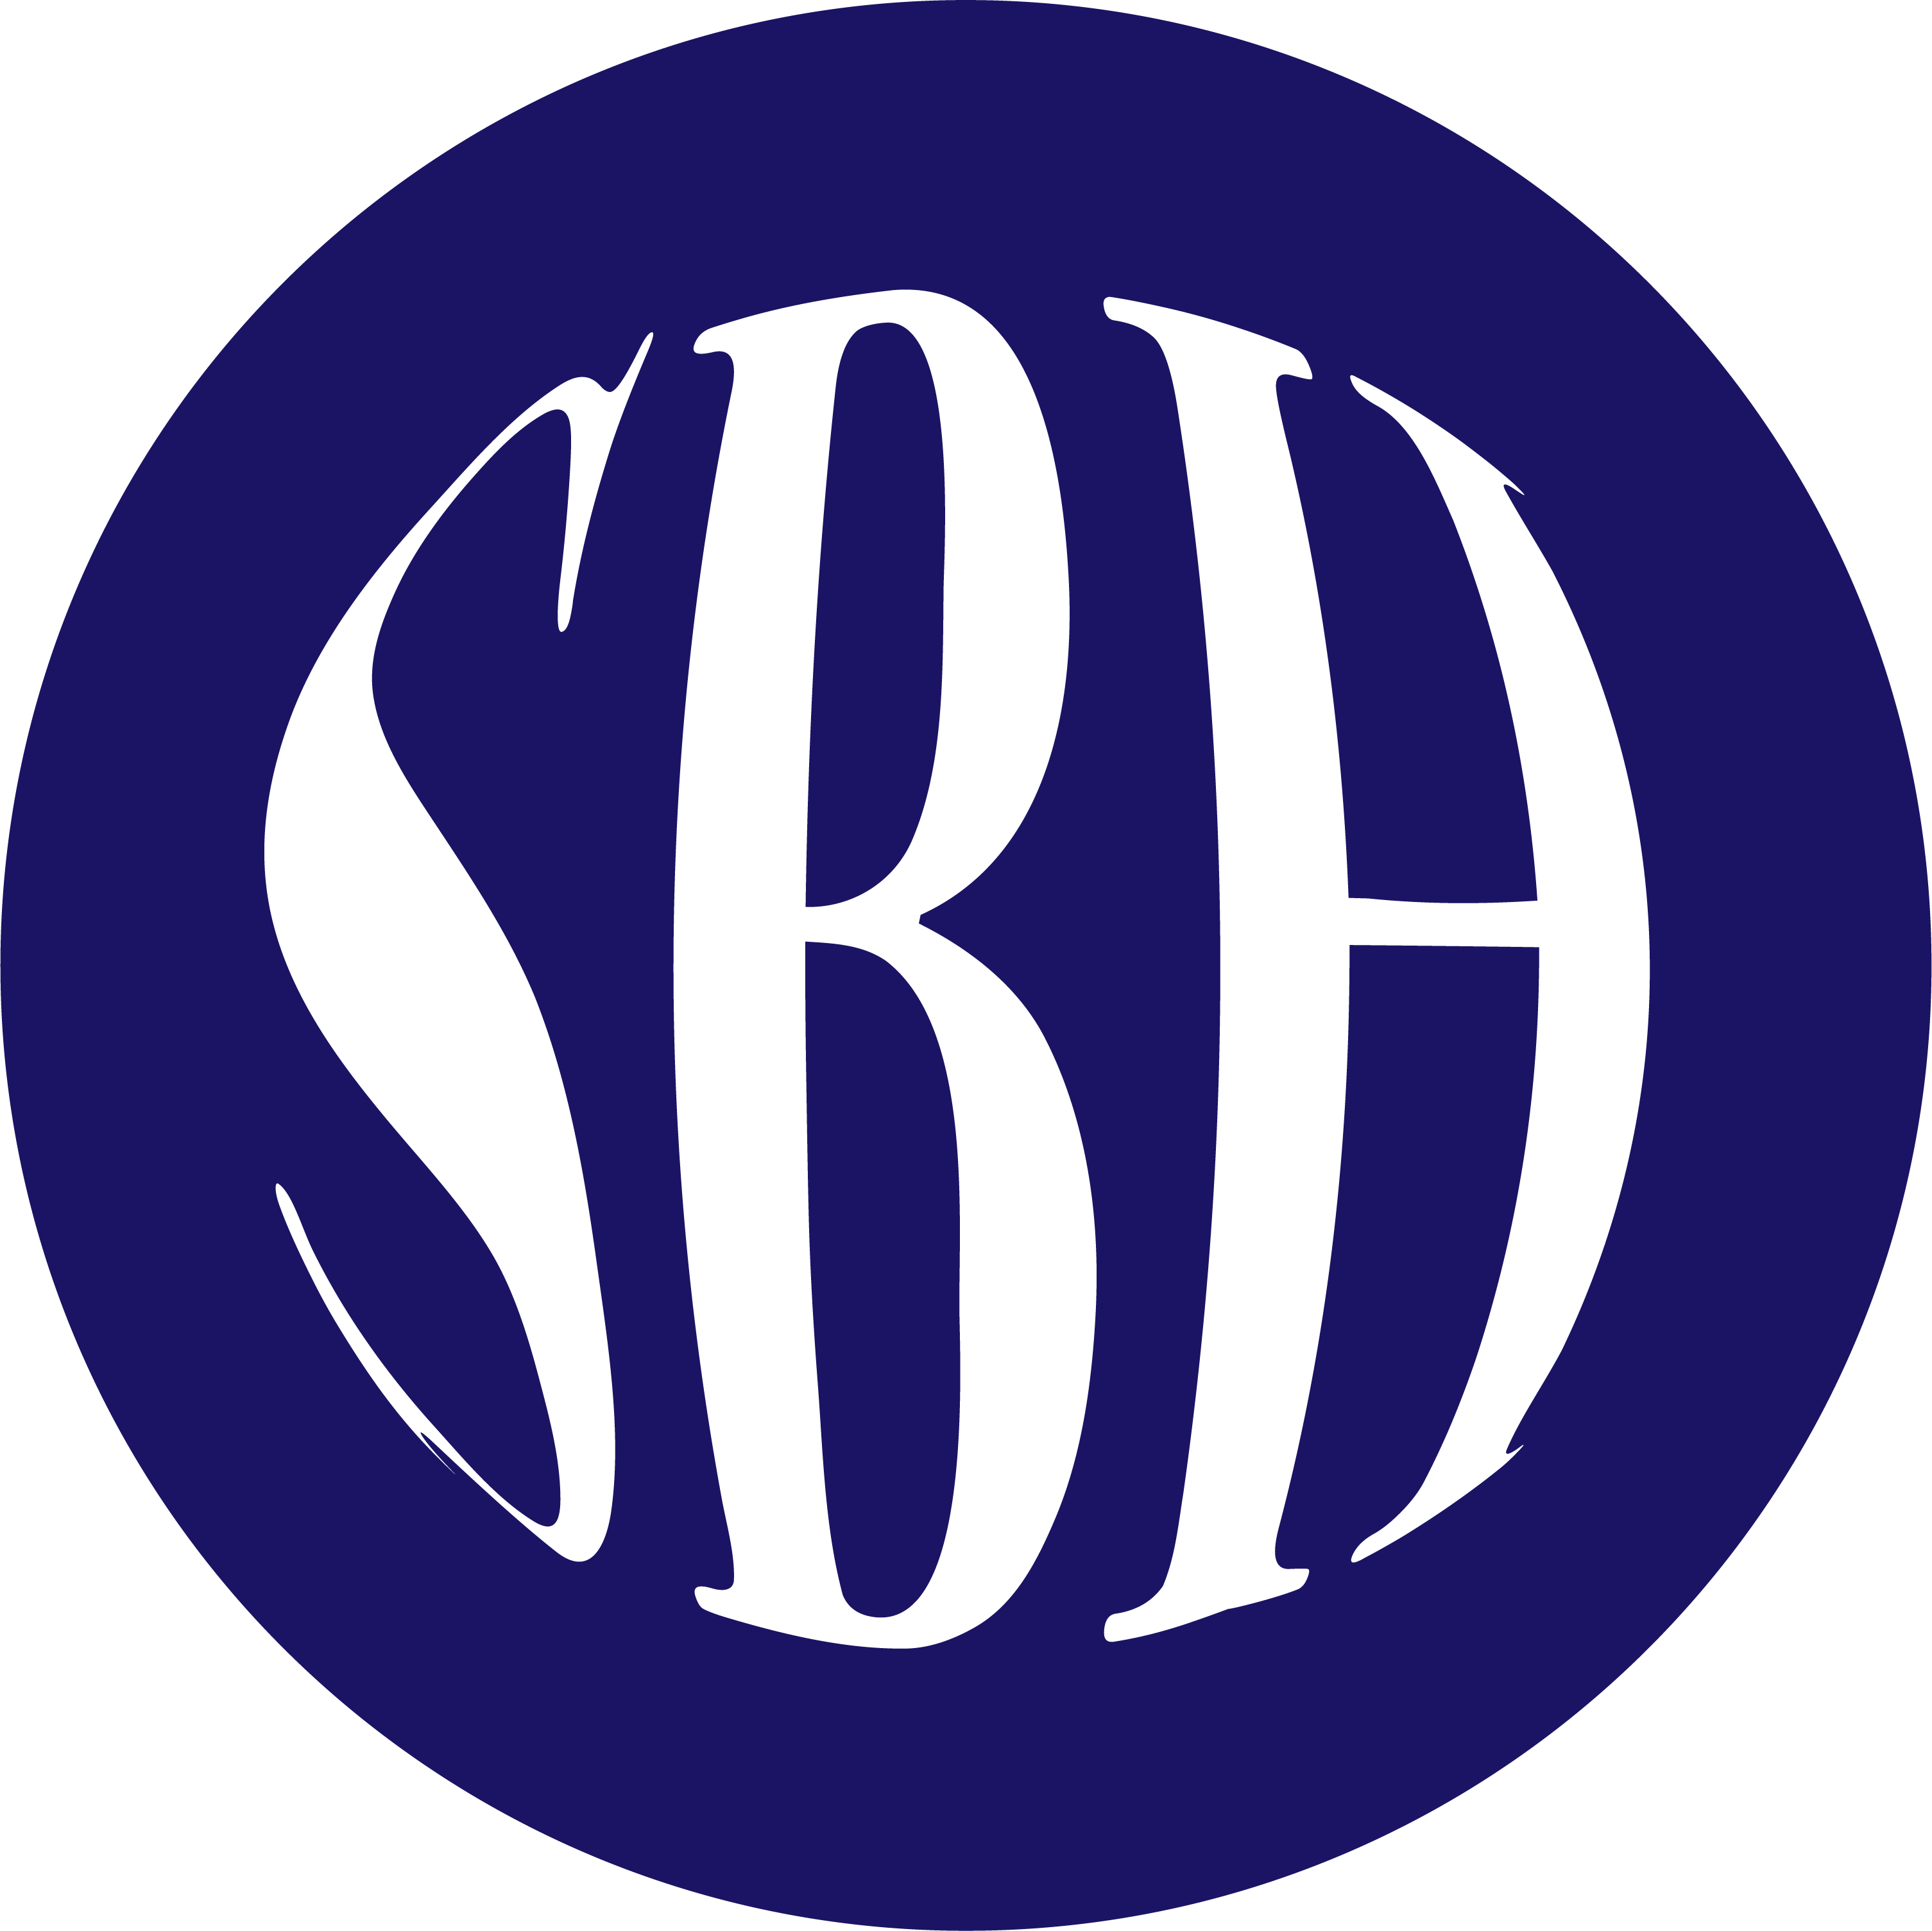 SBH Logo - SBH Financial Solutions Ltd Chamber of Commerce